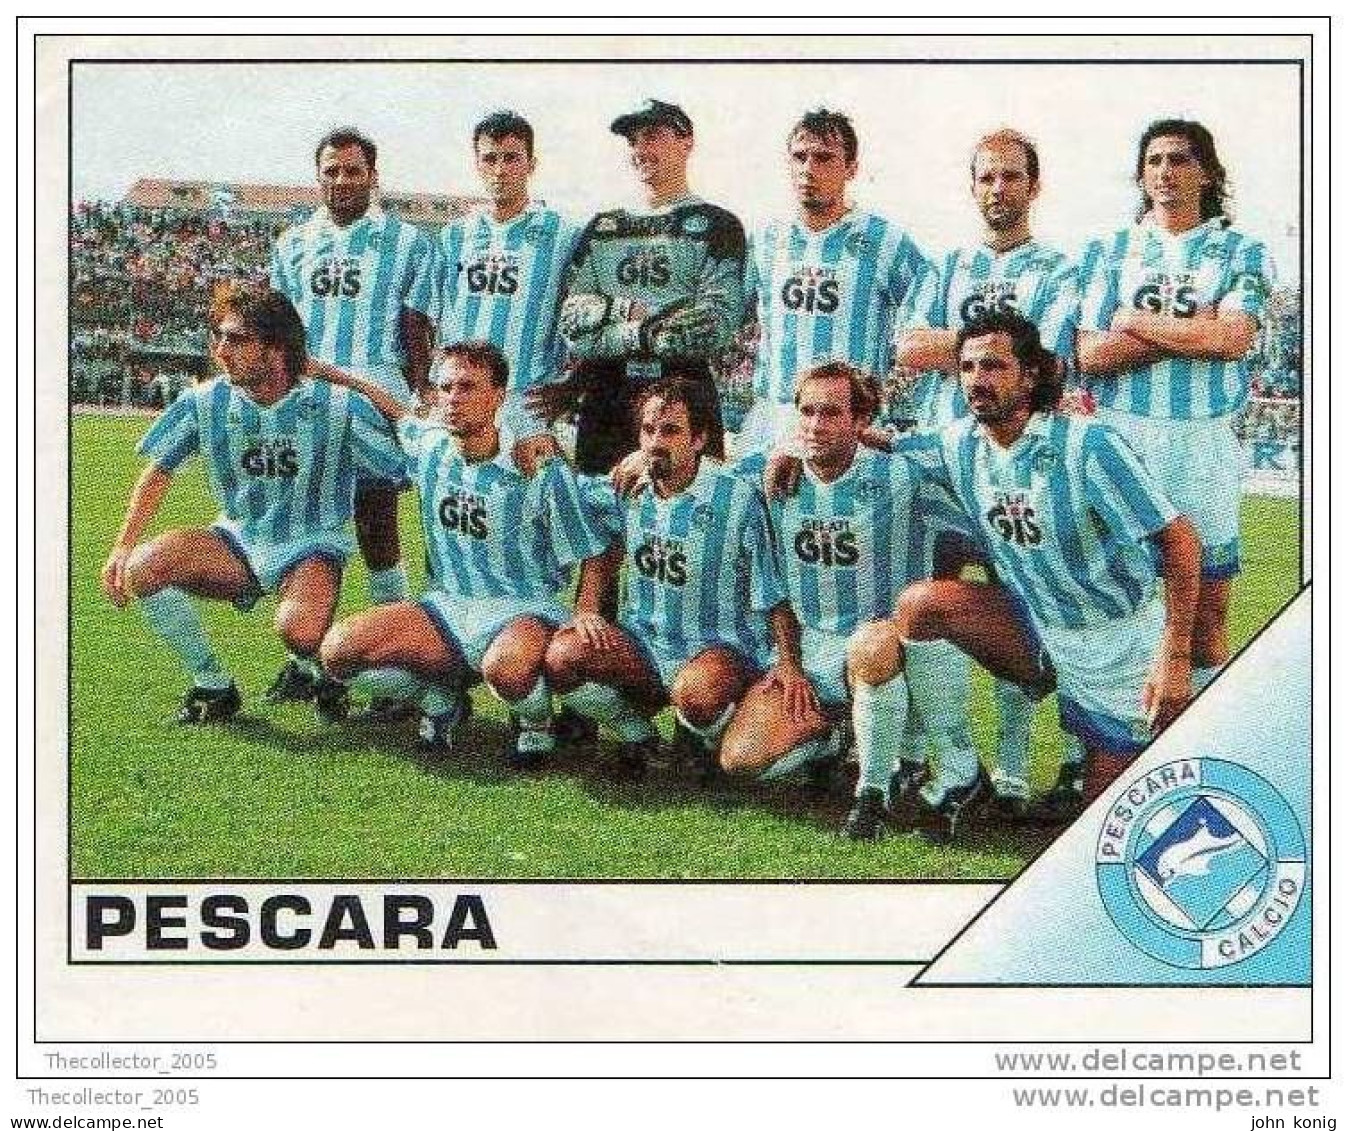 CALCIATORI - CALCIO Figurine Panini-calciatori 1995-96-n.460 (Pescara) - NUOVA-MAI INCOLLATA - Edición Italiana